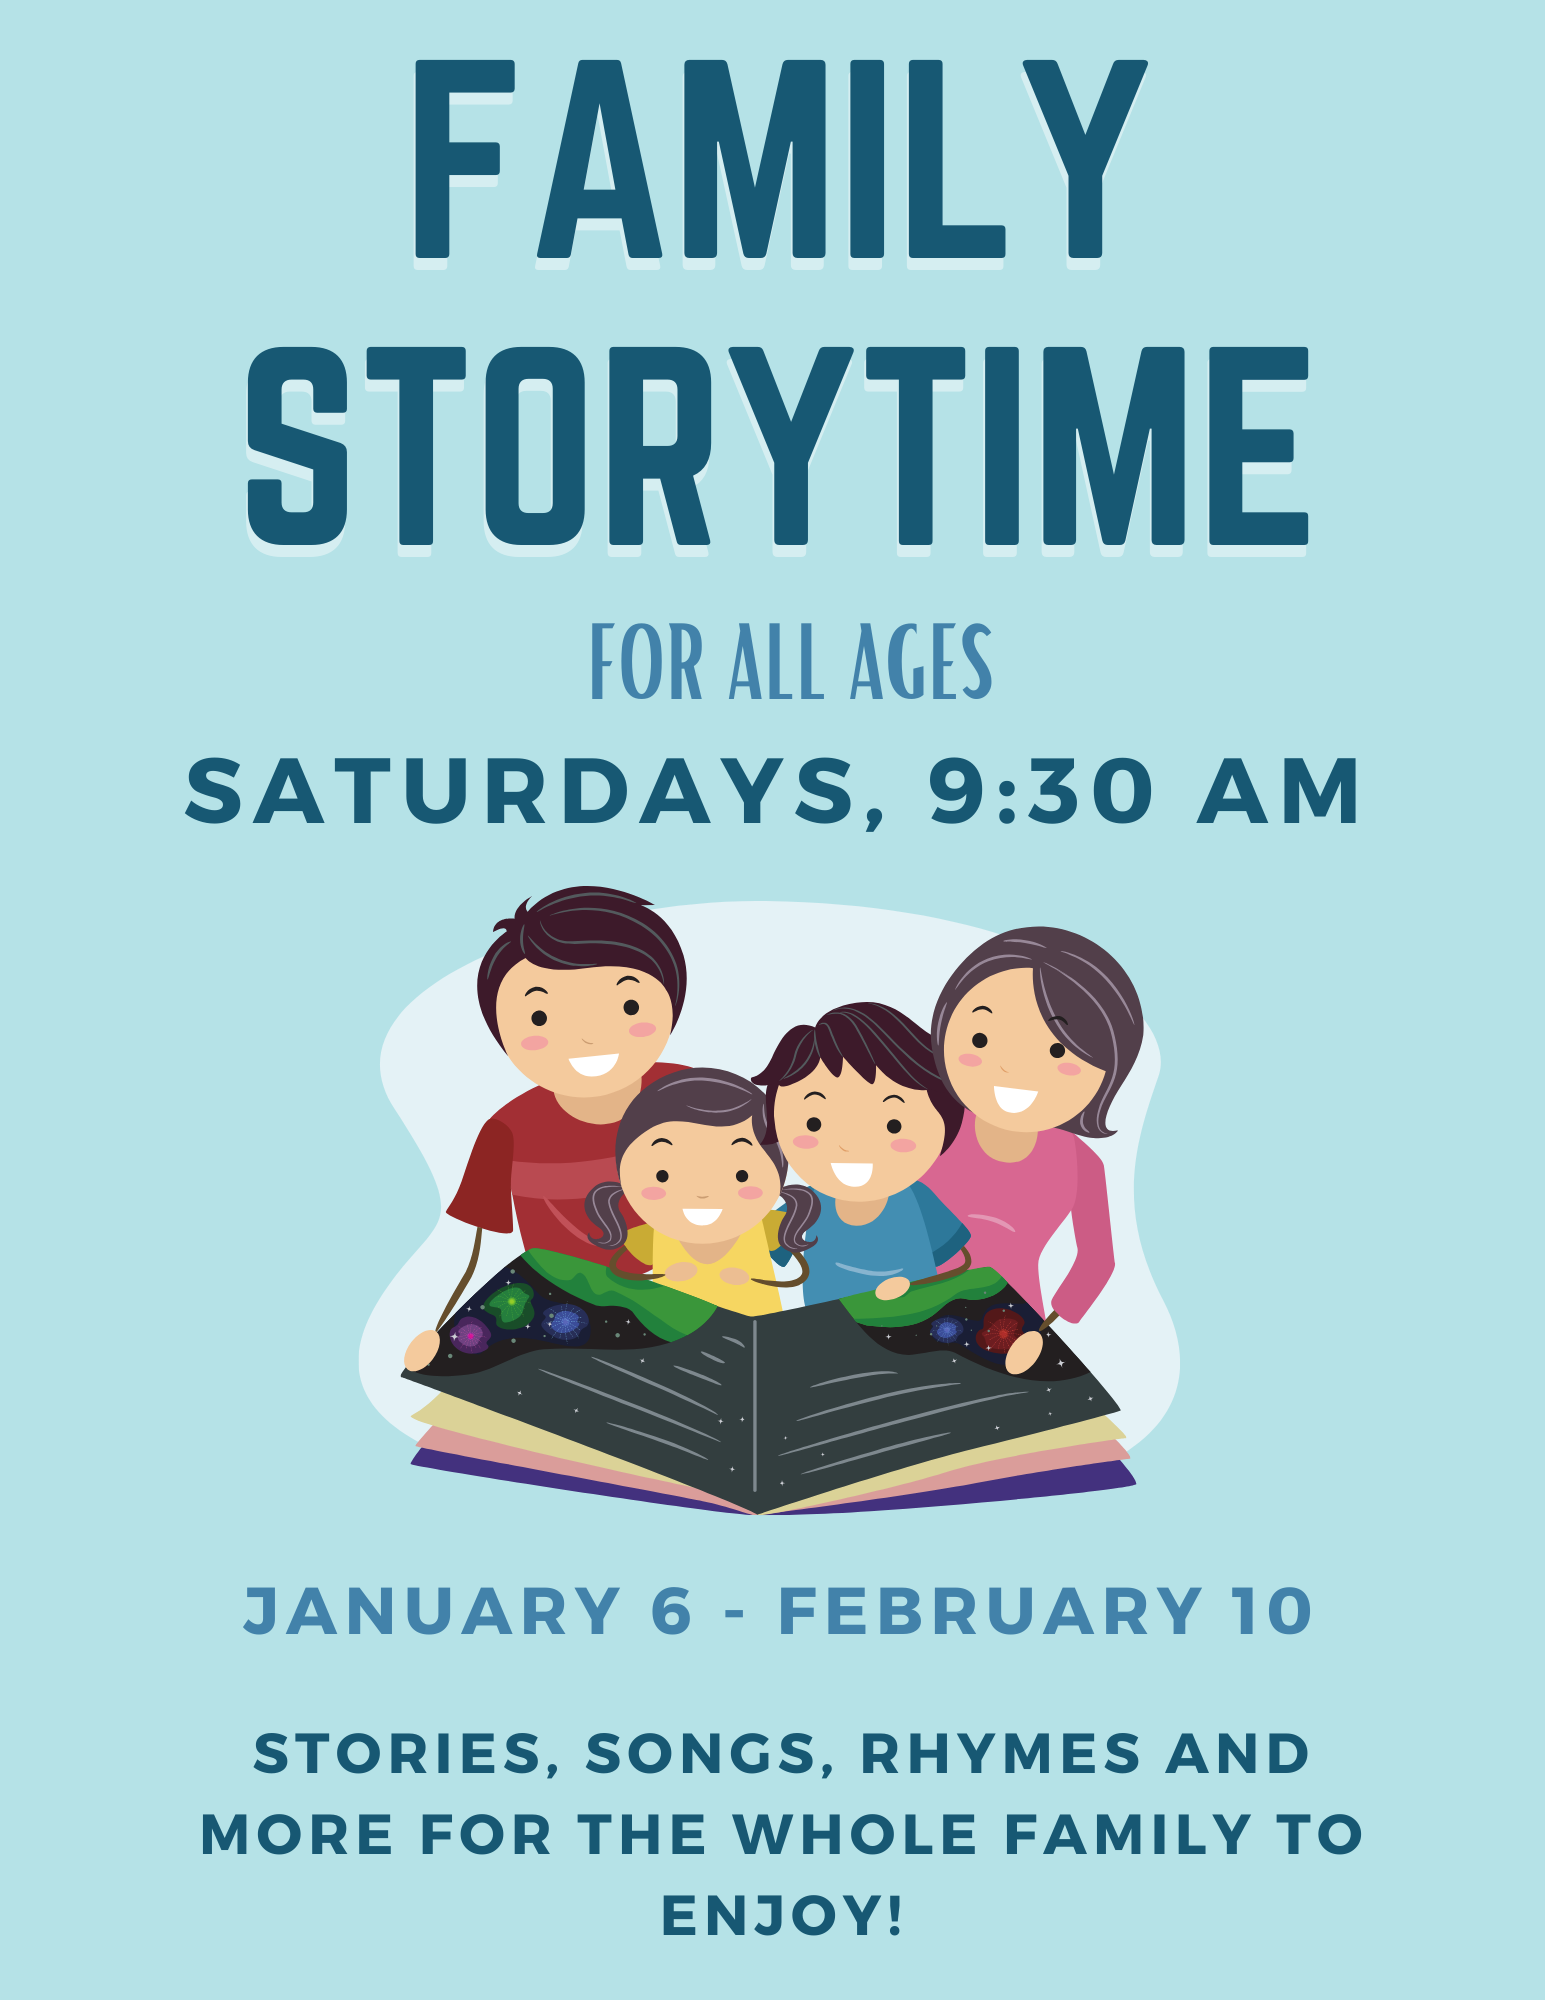 Family Storytime Saturdays 9:30